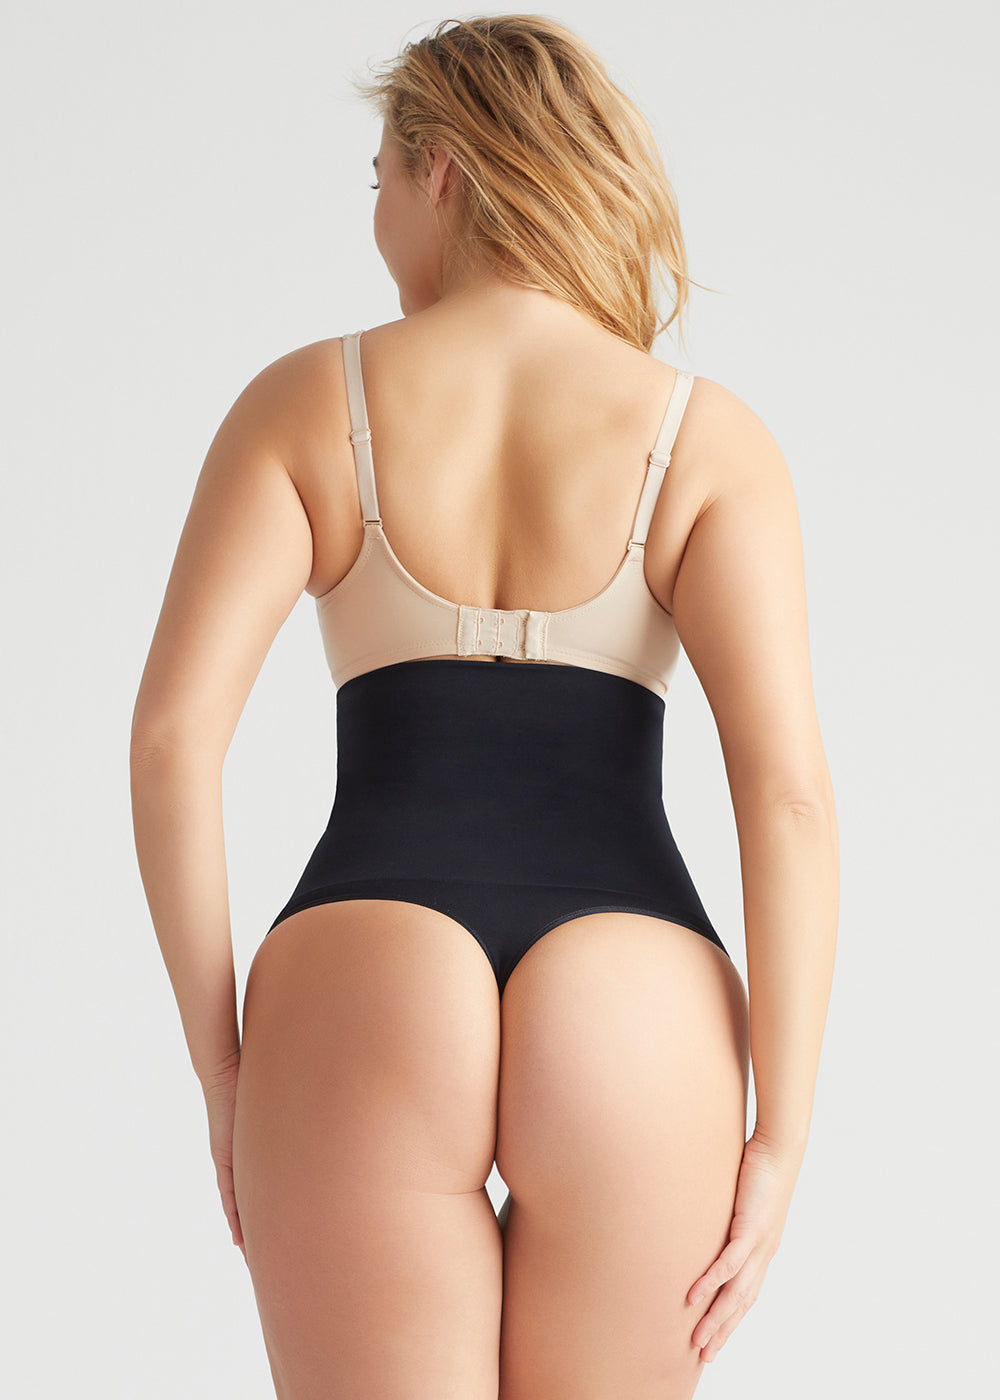 YUMMIE Amber Mid Waist Thong Women's Underwear Sz L/XL Black YT5-296 (New)